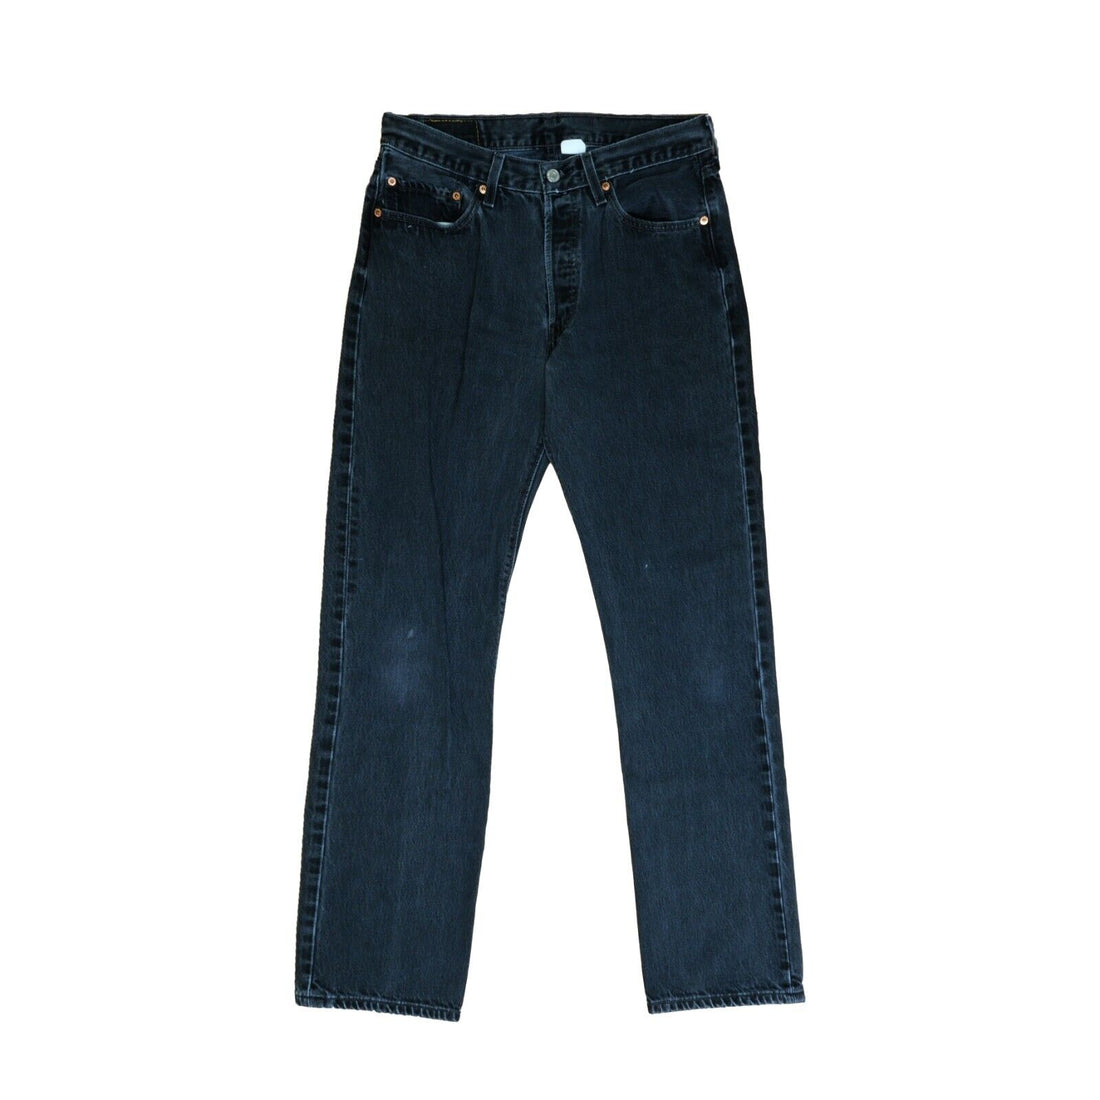 Vintage Levi Strauss & Co 501 Button Fly Denim Jeans Pants Size 34W X 32L Black